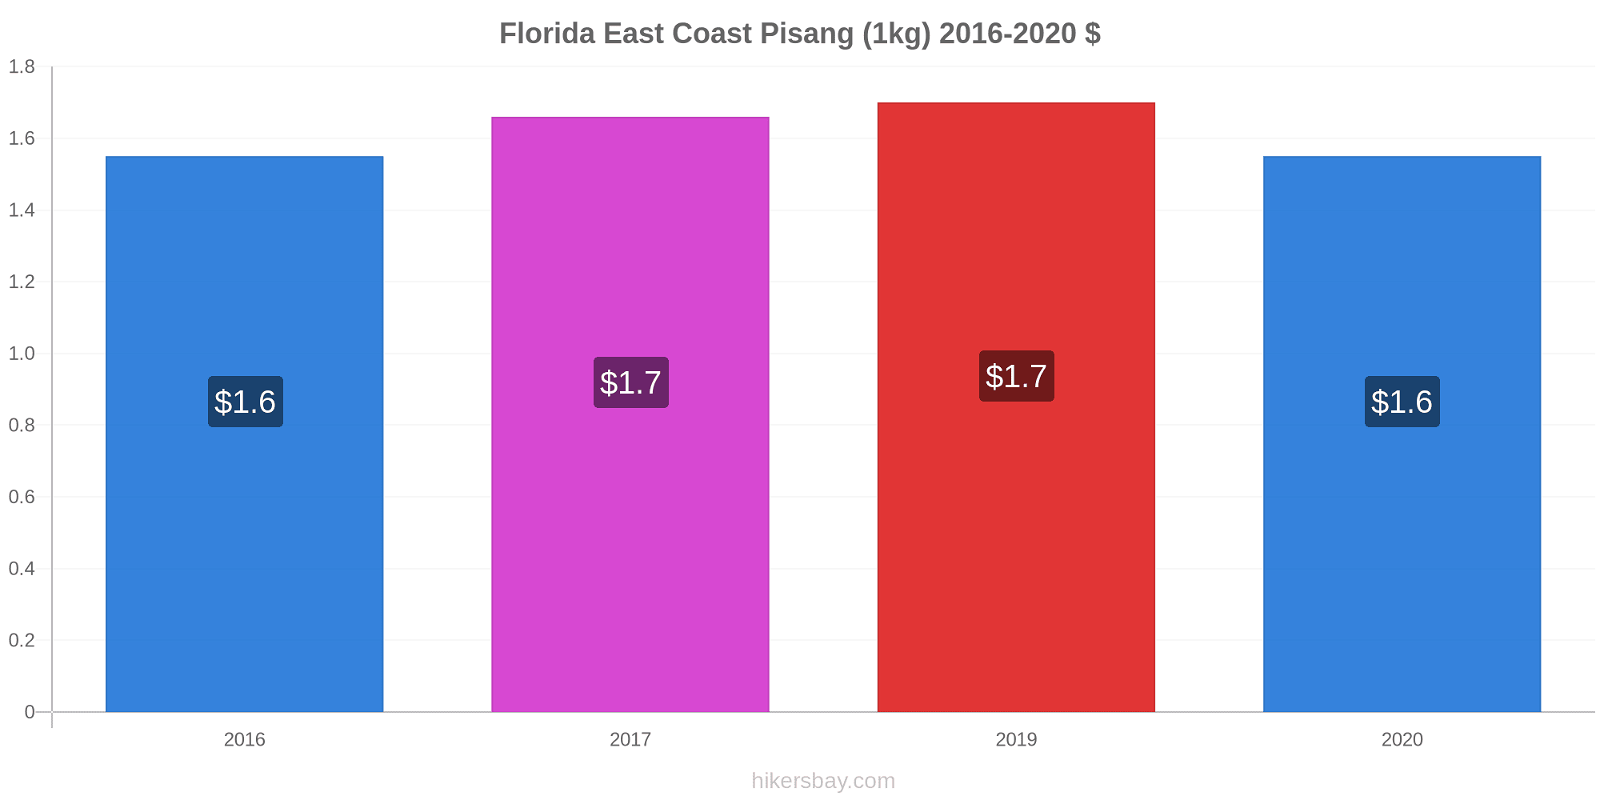 Florida East Coast perubahan harga Pisang (1kg) hikersbay.com